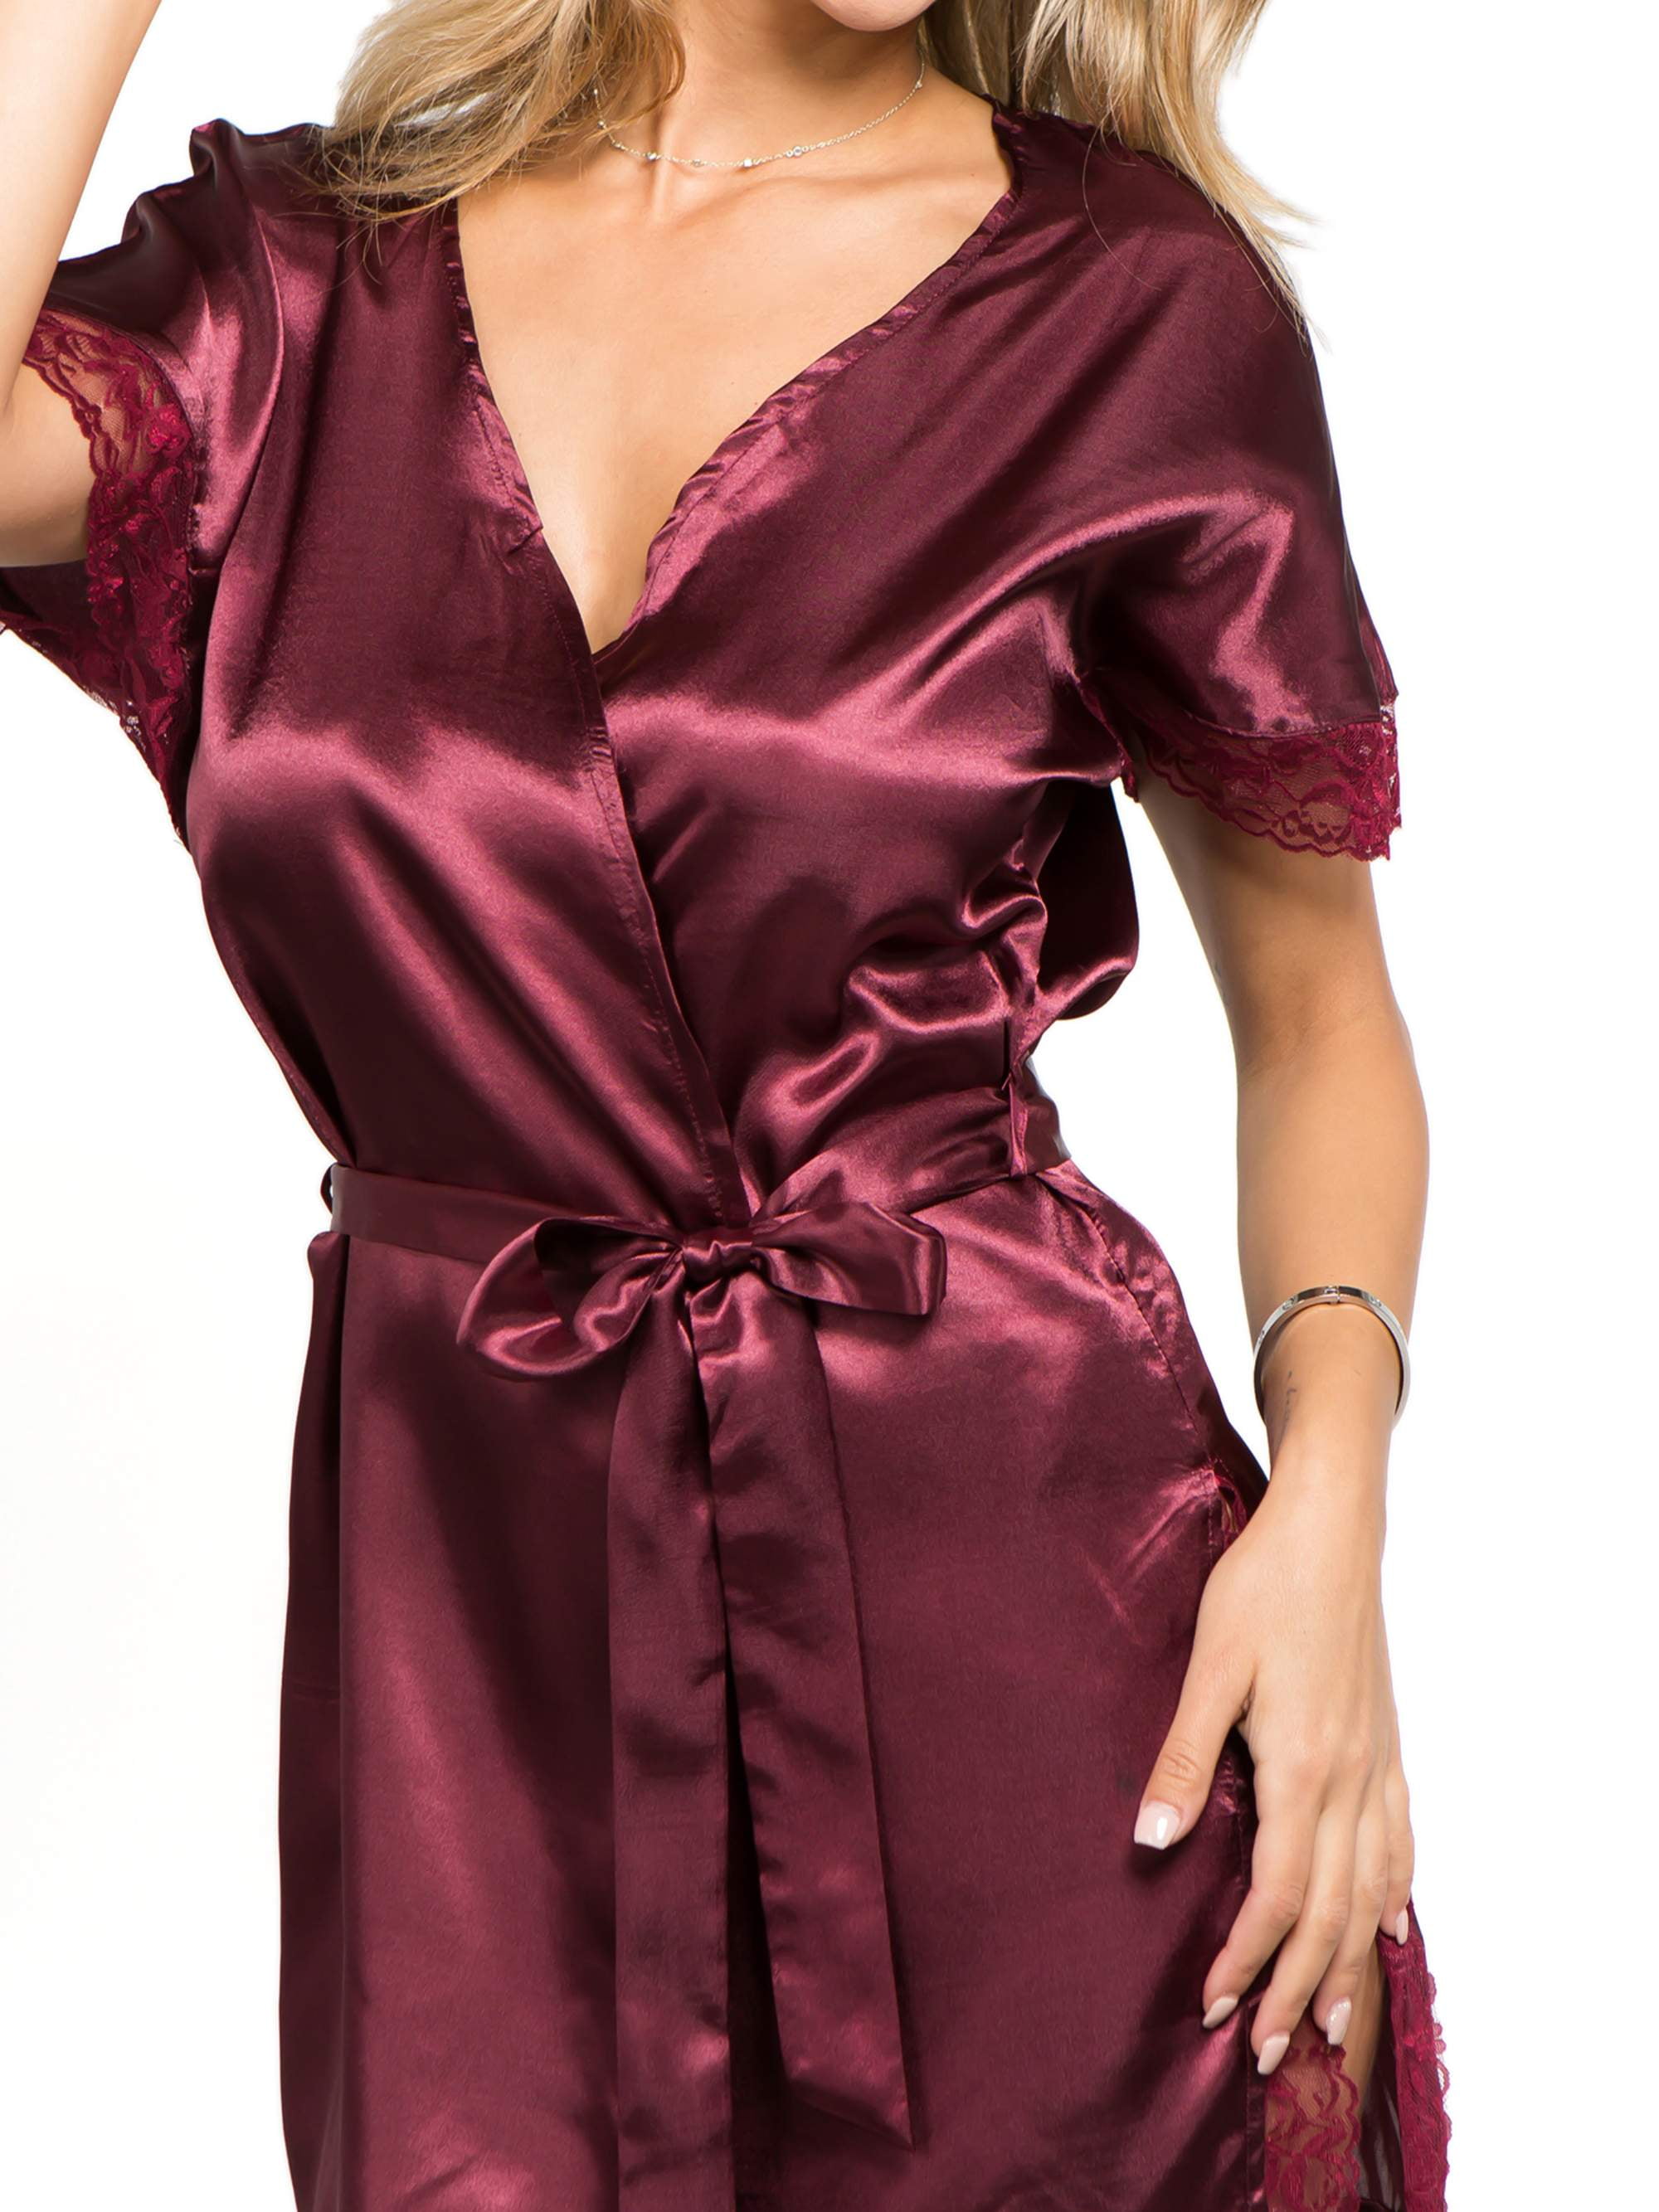 Just Sexy Lingerie Women's Short Sleeve Satin Robe, Burgundy, 2X/3X